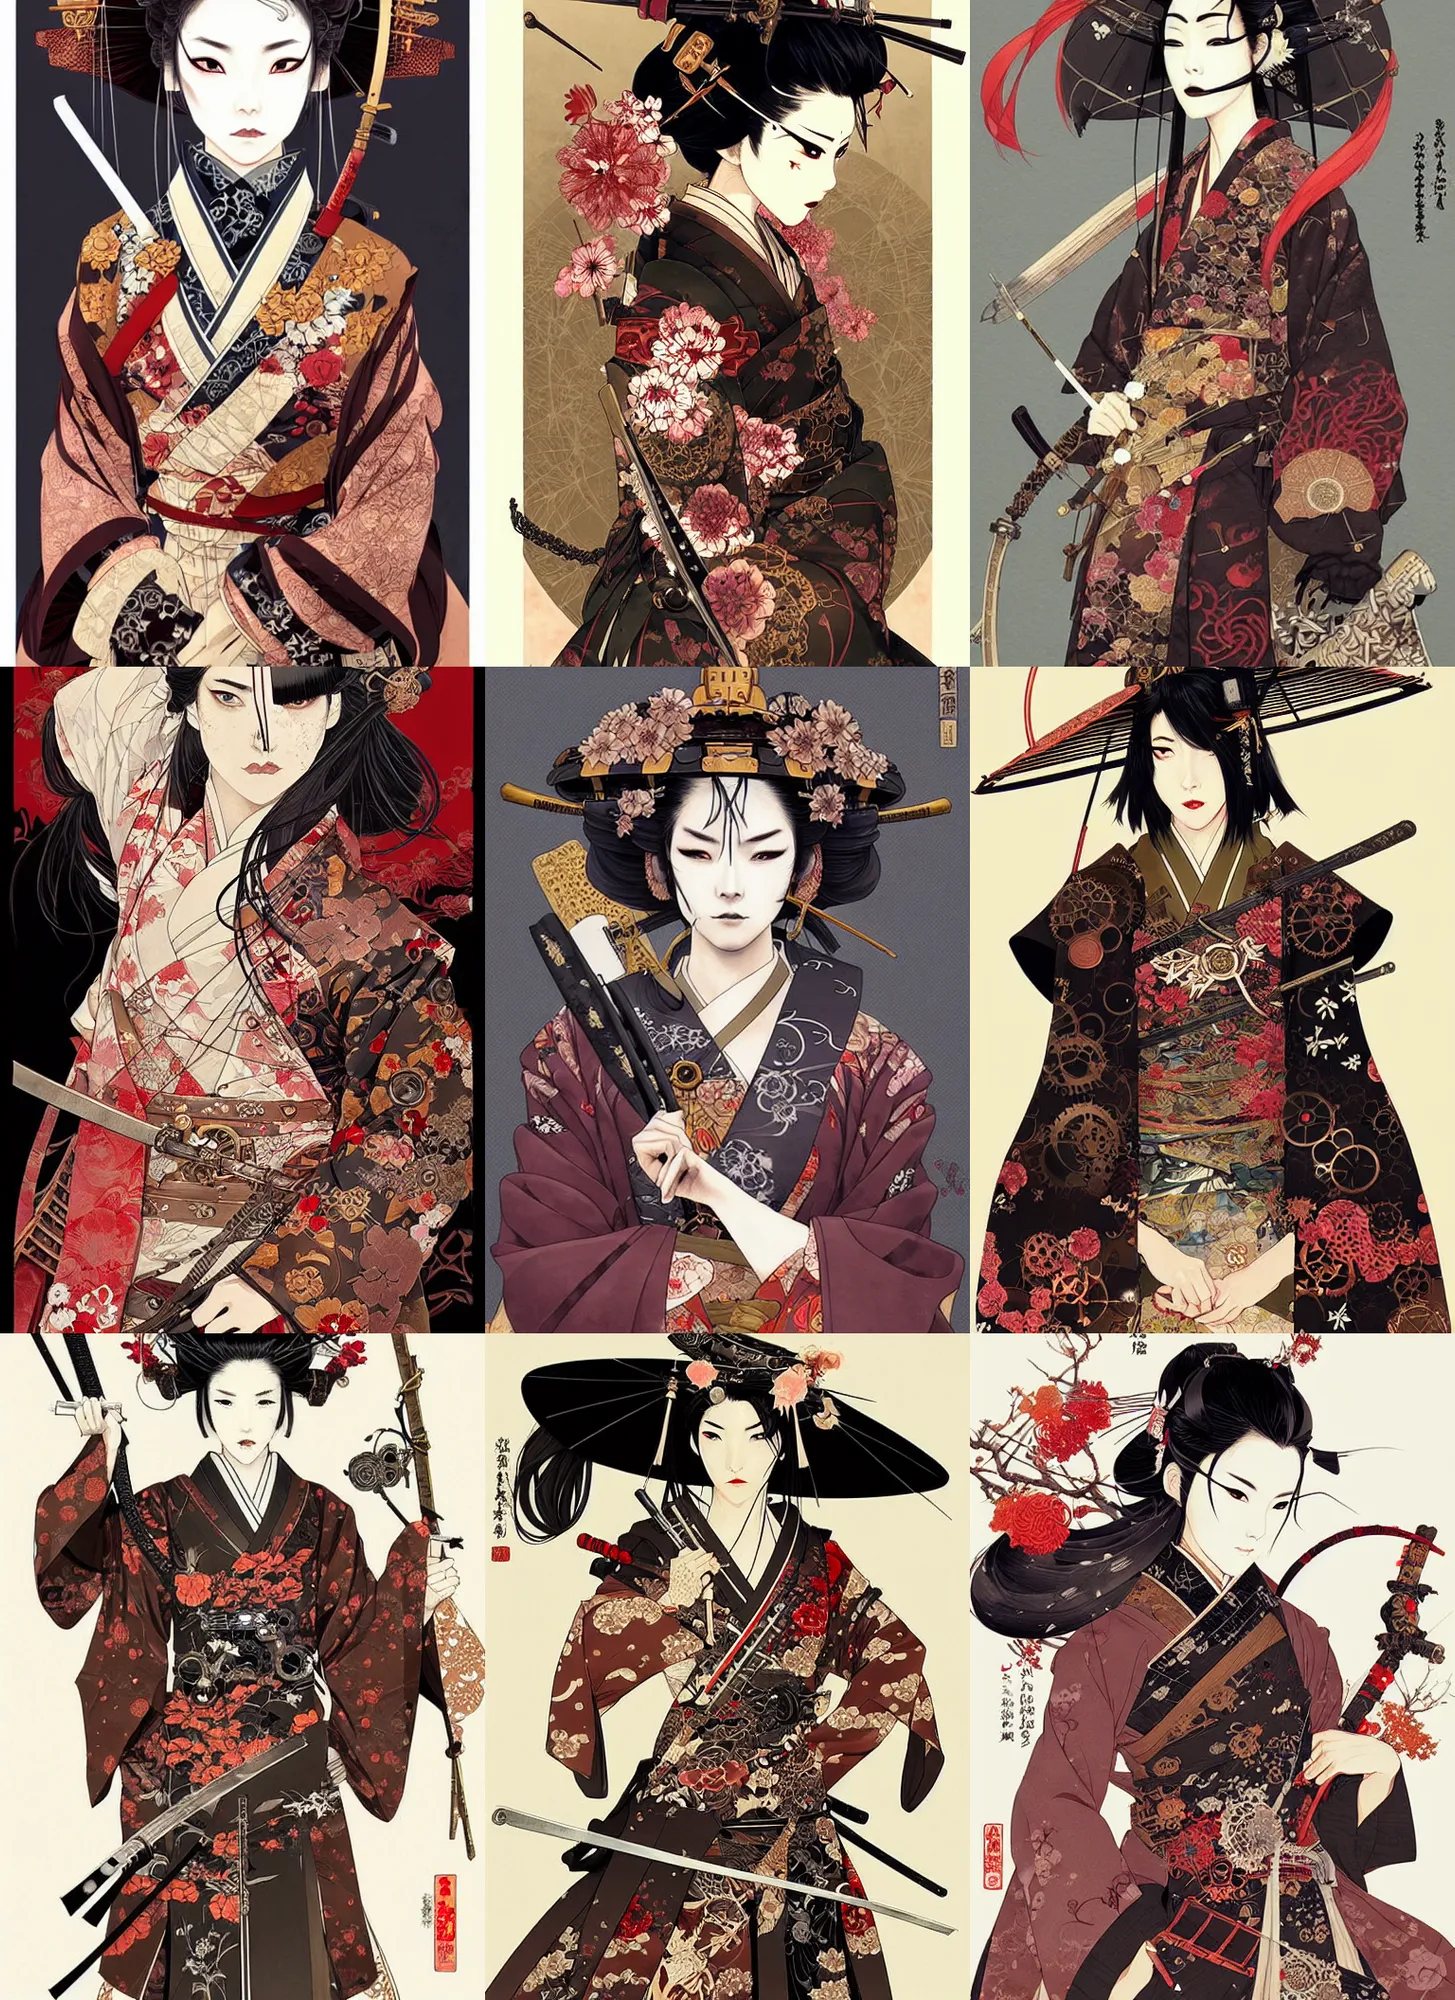 Prompt: very beautiful steampunk samurai, detailed portrait, wearing kimono, sword, by conrad roset, takato yomamoto, jesper ejsing, beautiful